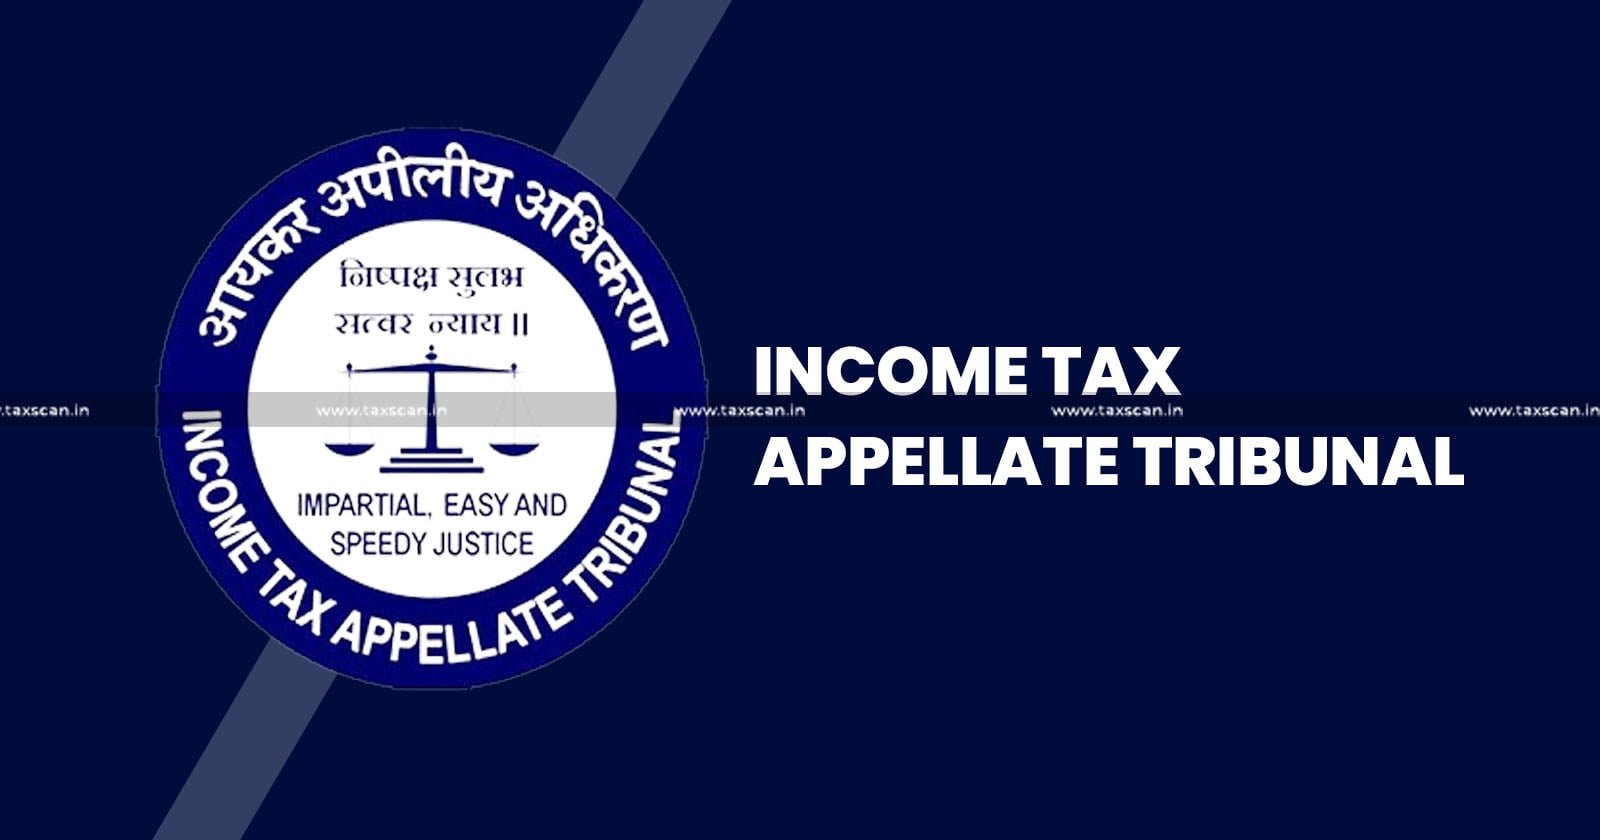 ITAT - ITAT Mumbai - Income Tax - Income tax news - Prior period expenses - taxscan